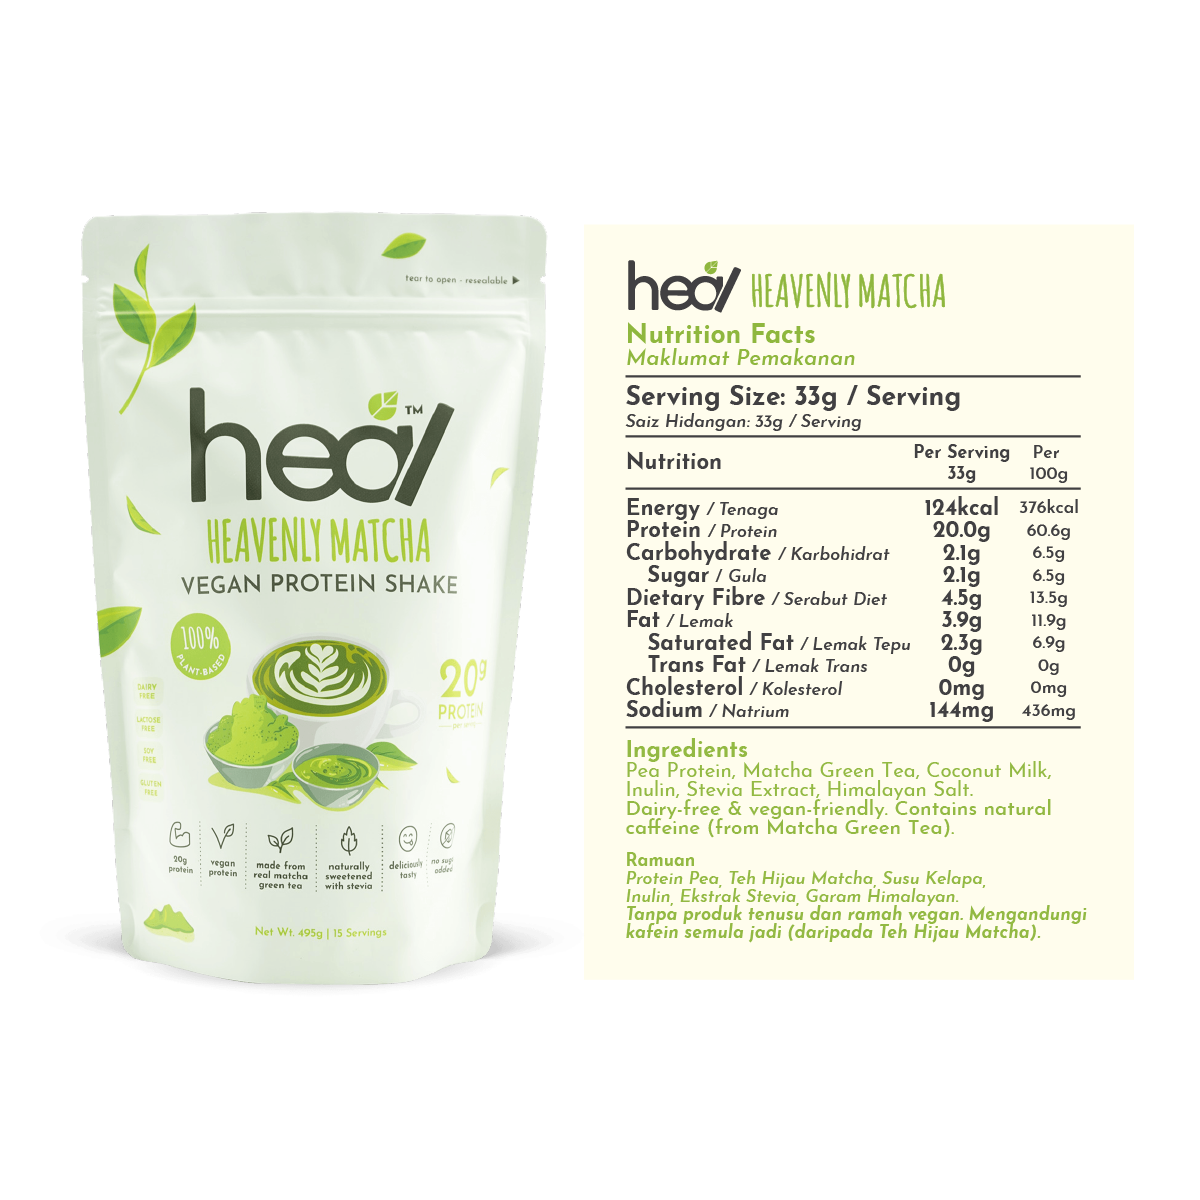 [Subscription Plan] Heal Heavenly Matcha Vegan Protein Shake, 15 Servings Value Pack